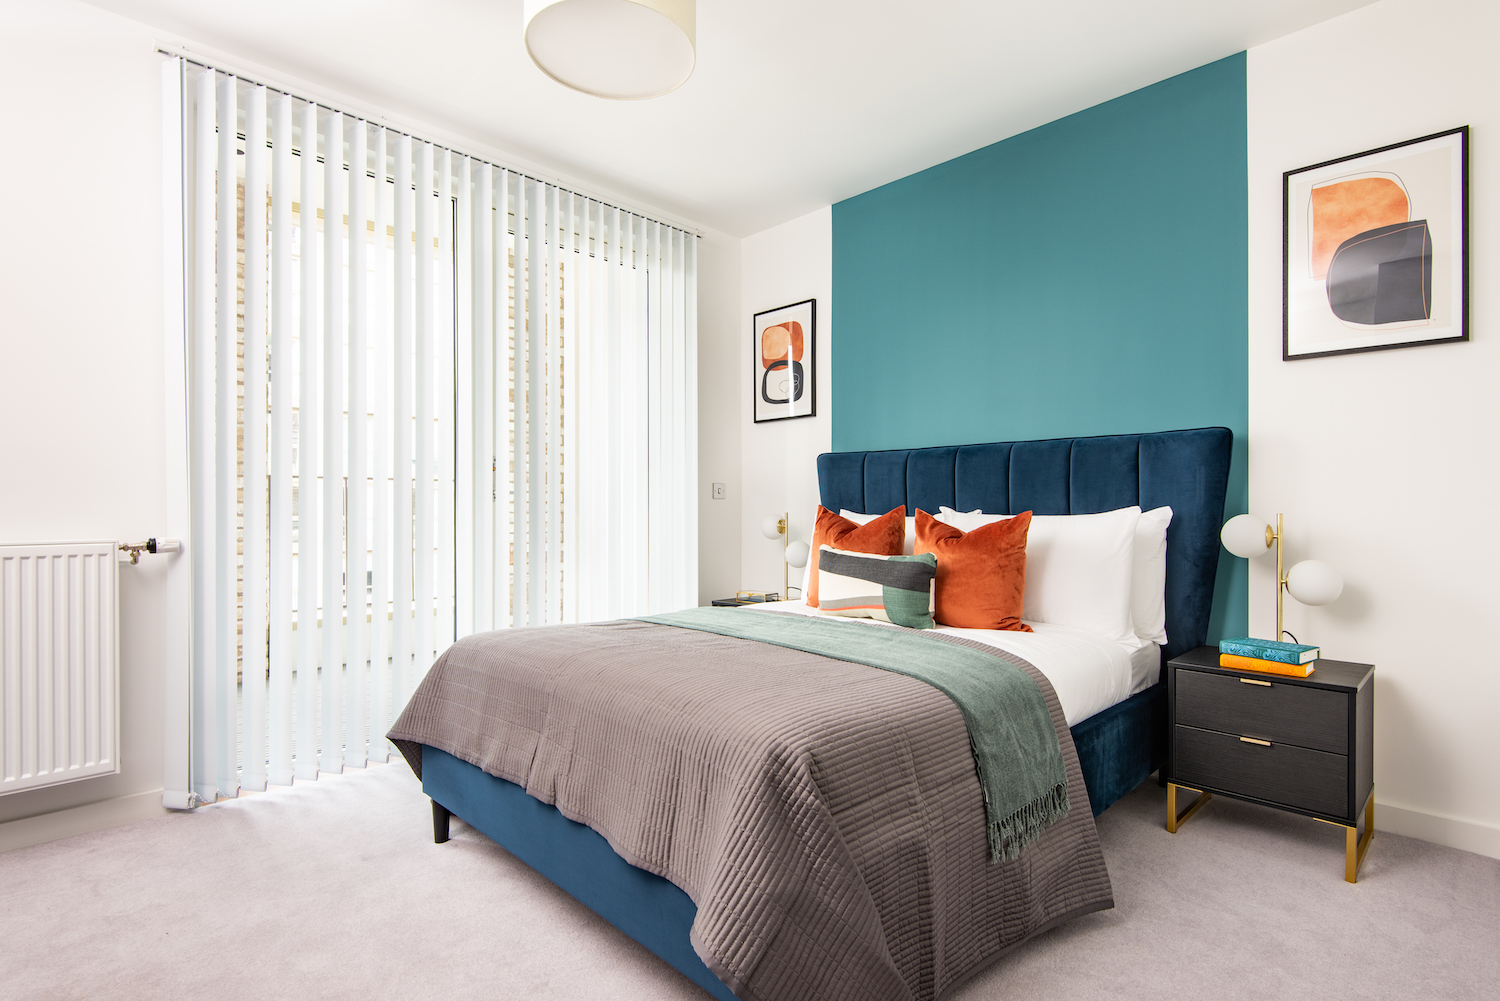 David_Phillips_Residential_Furniture_Bedroom_interior design